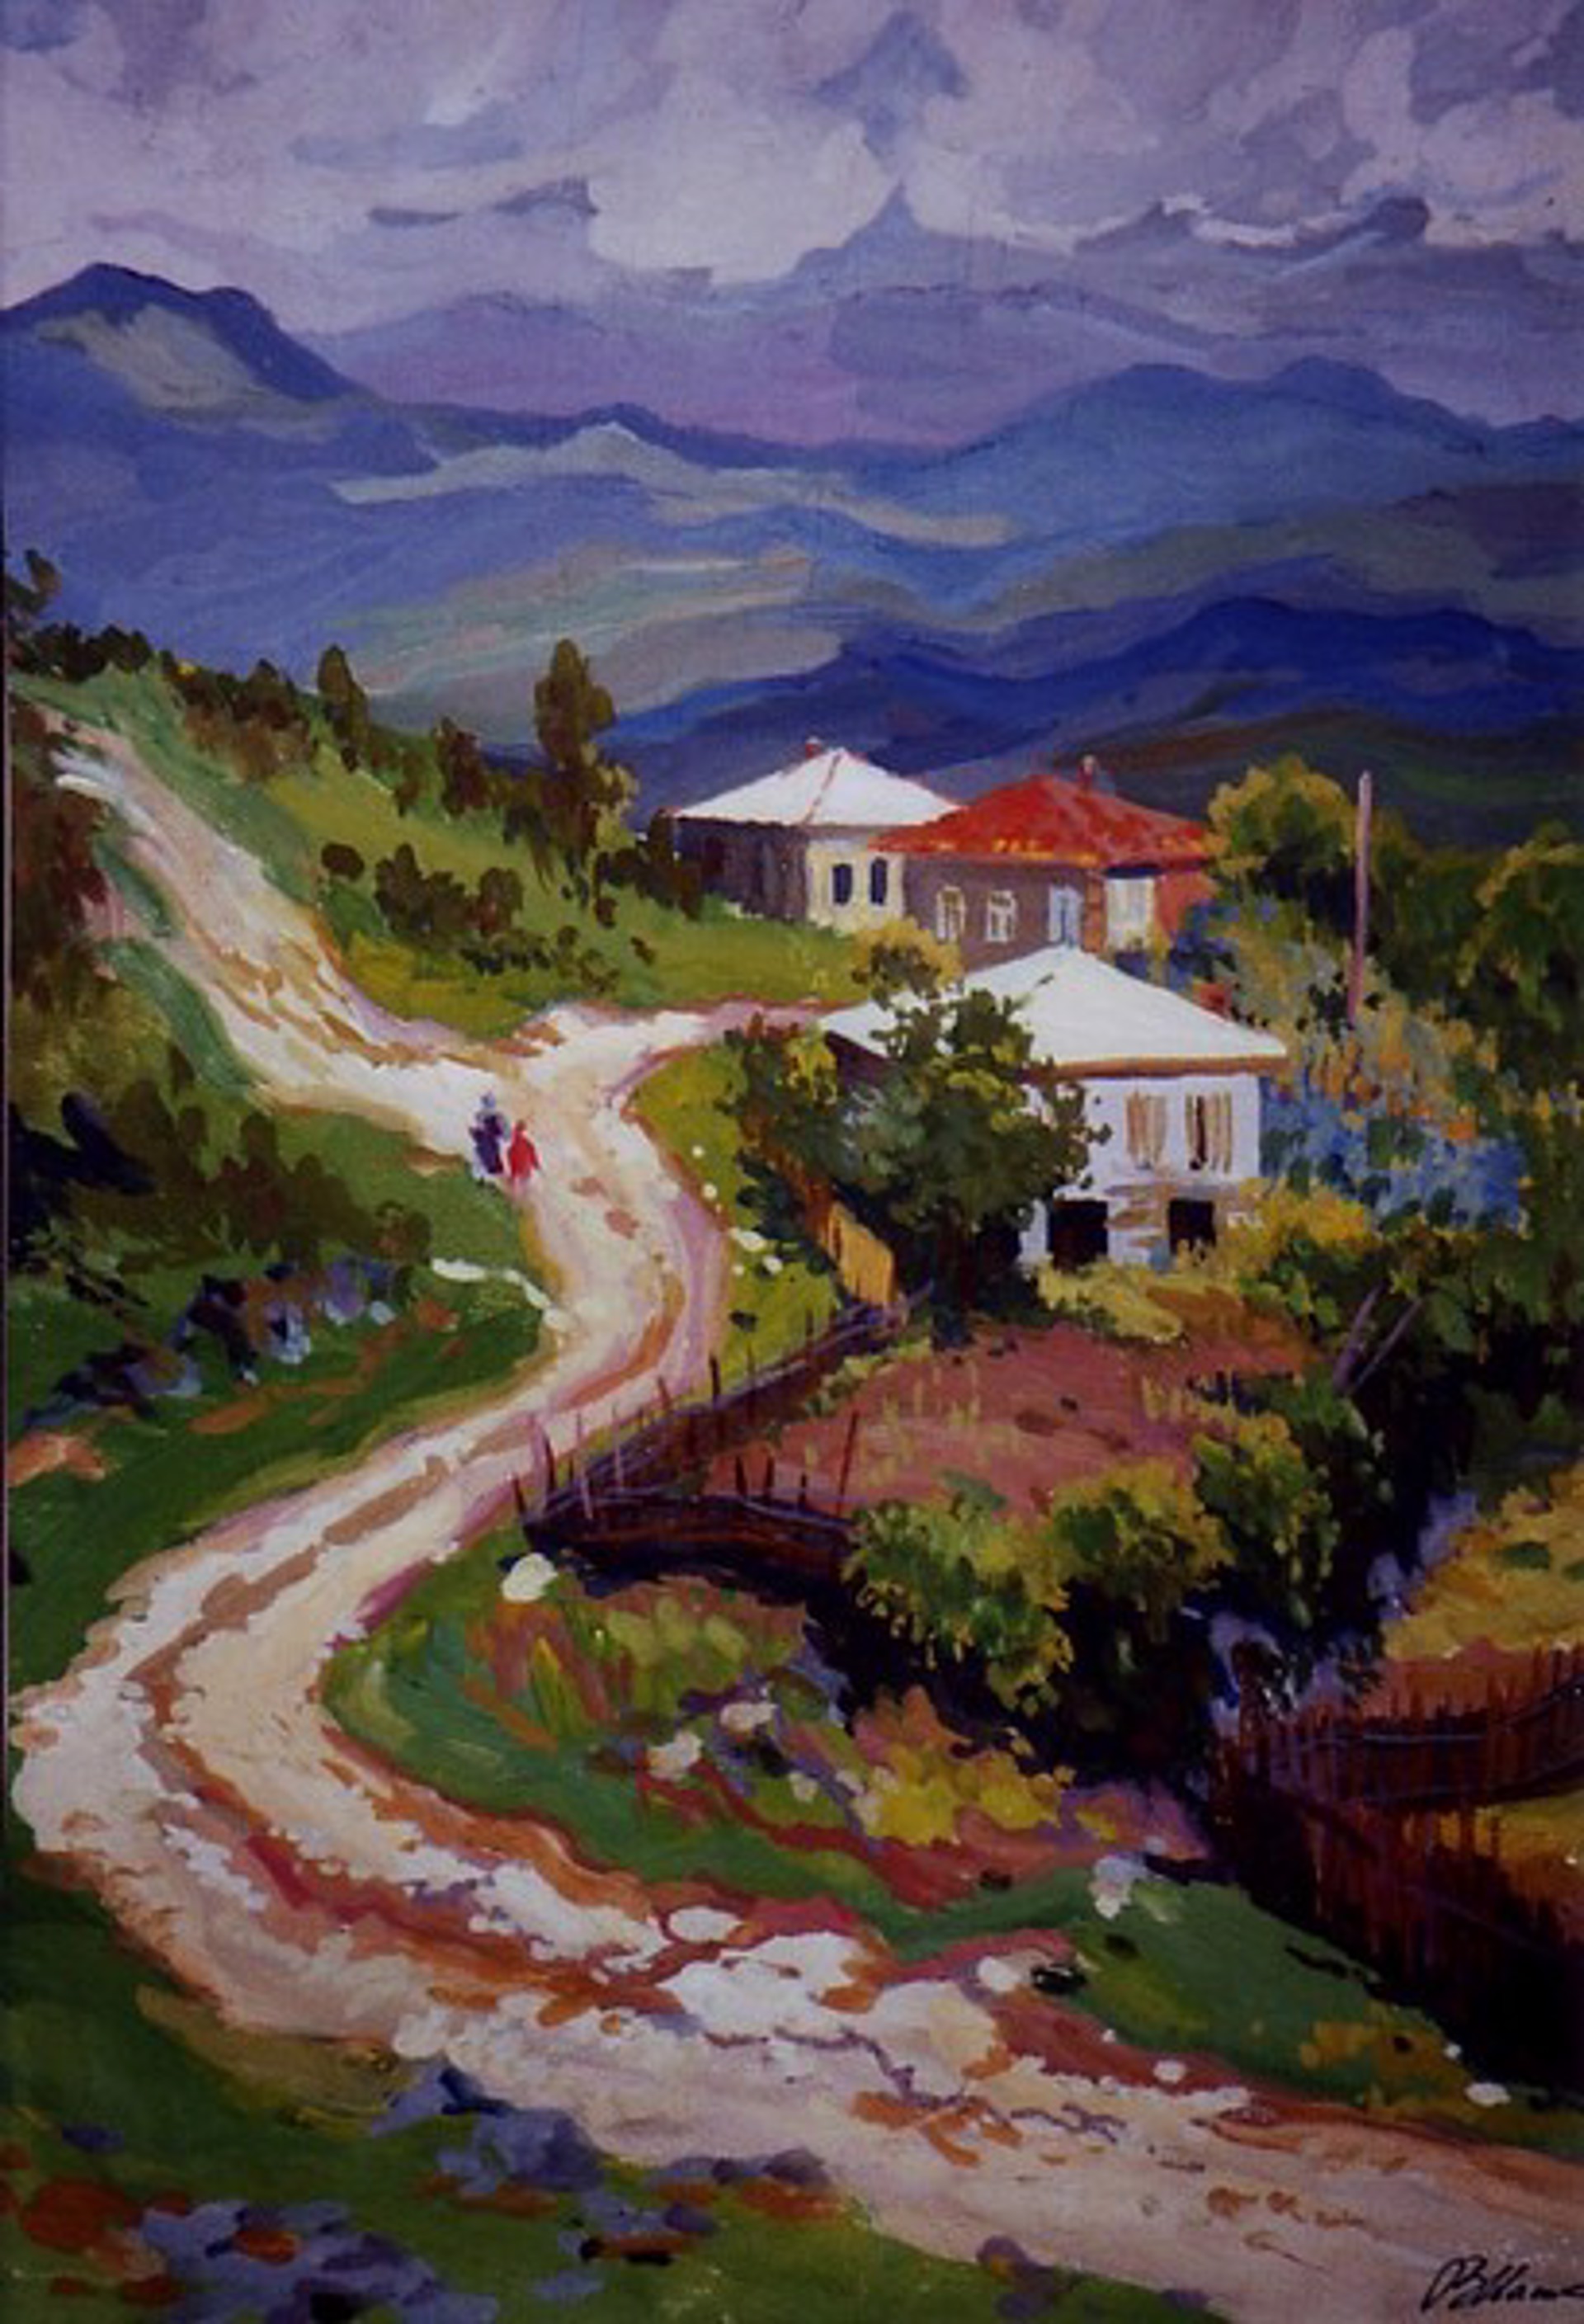 Mountain Road - Georgia by Vladimir Masik